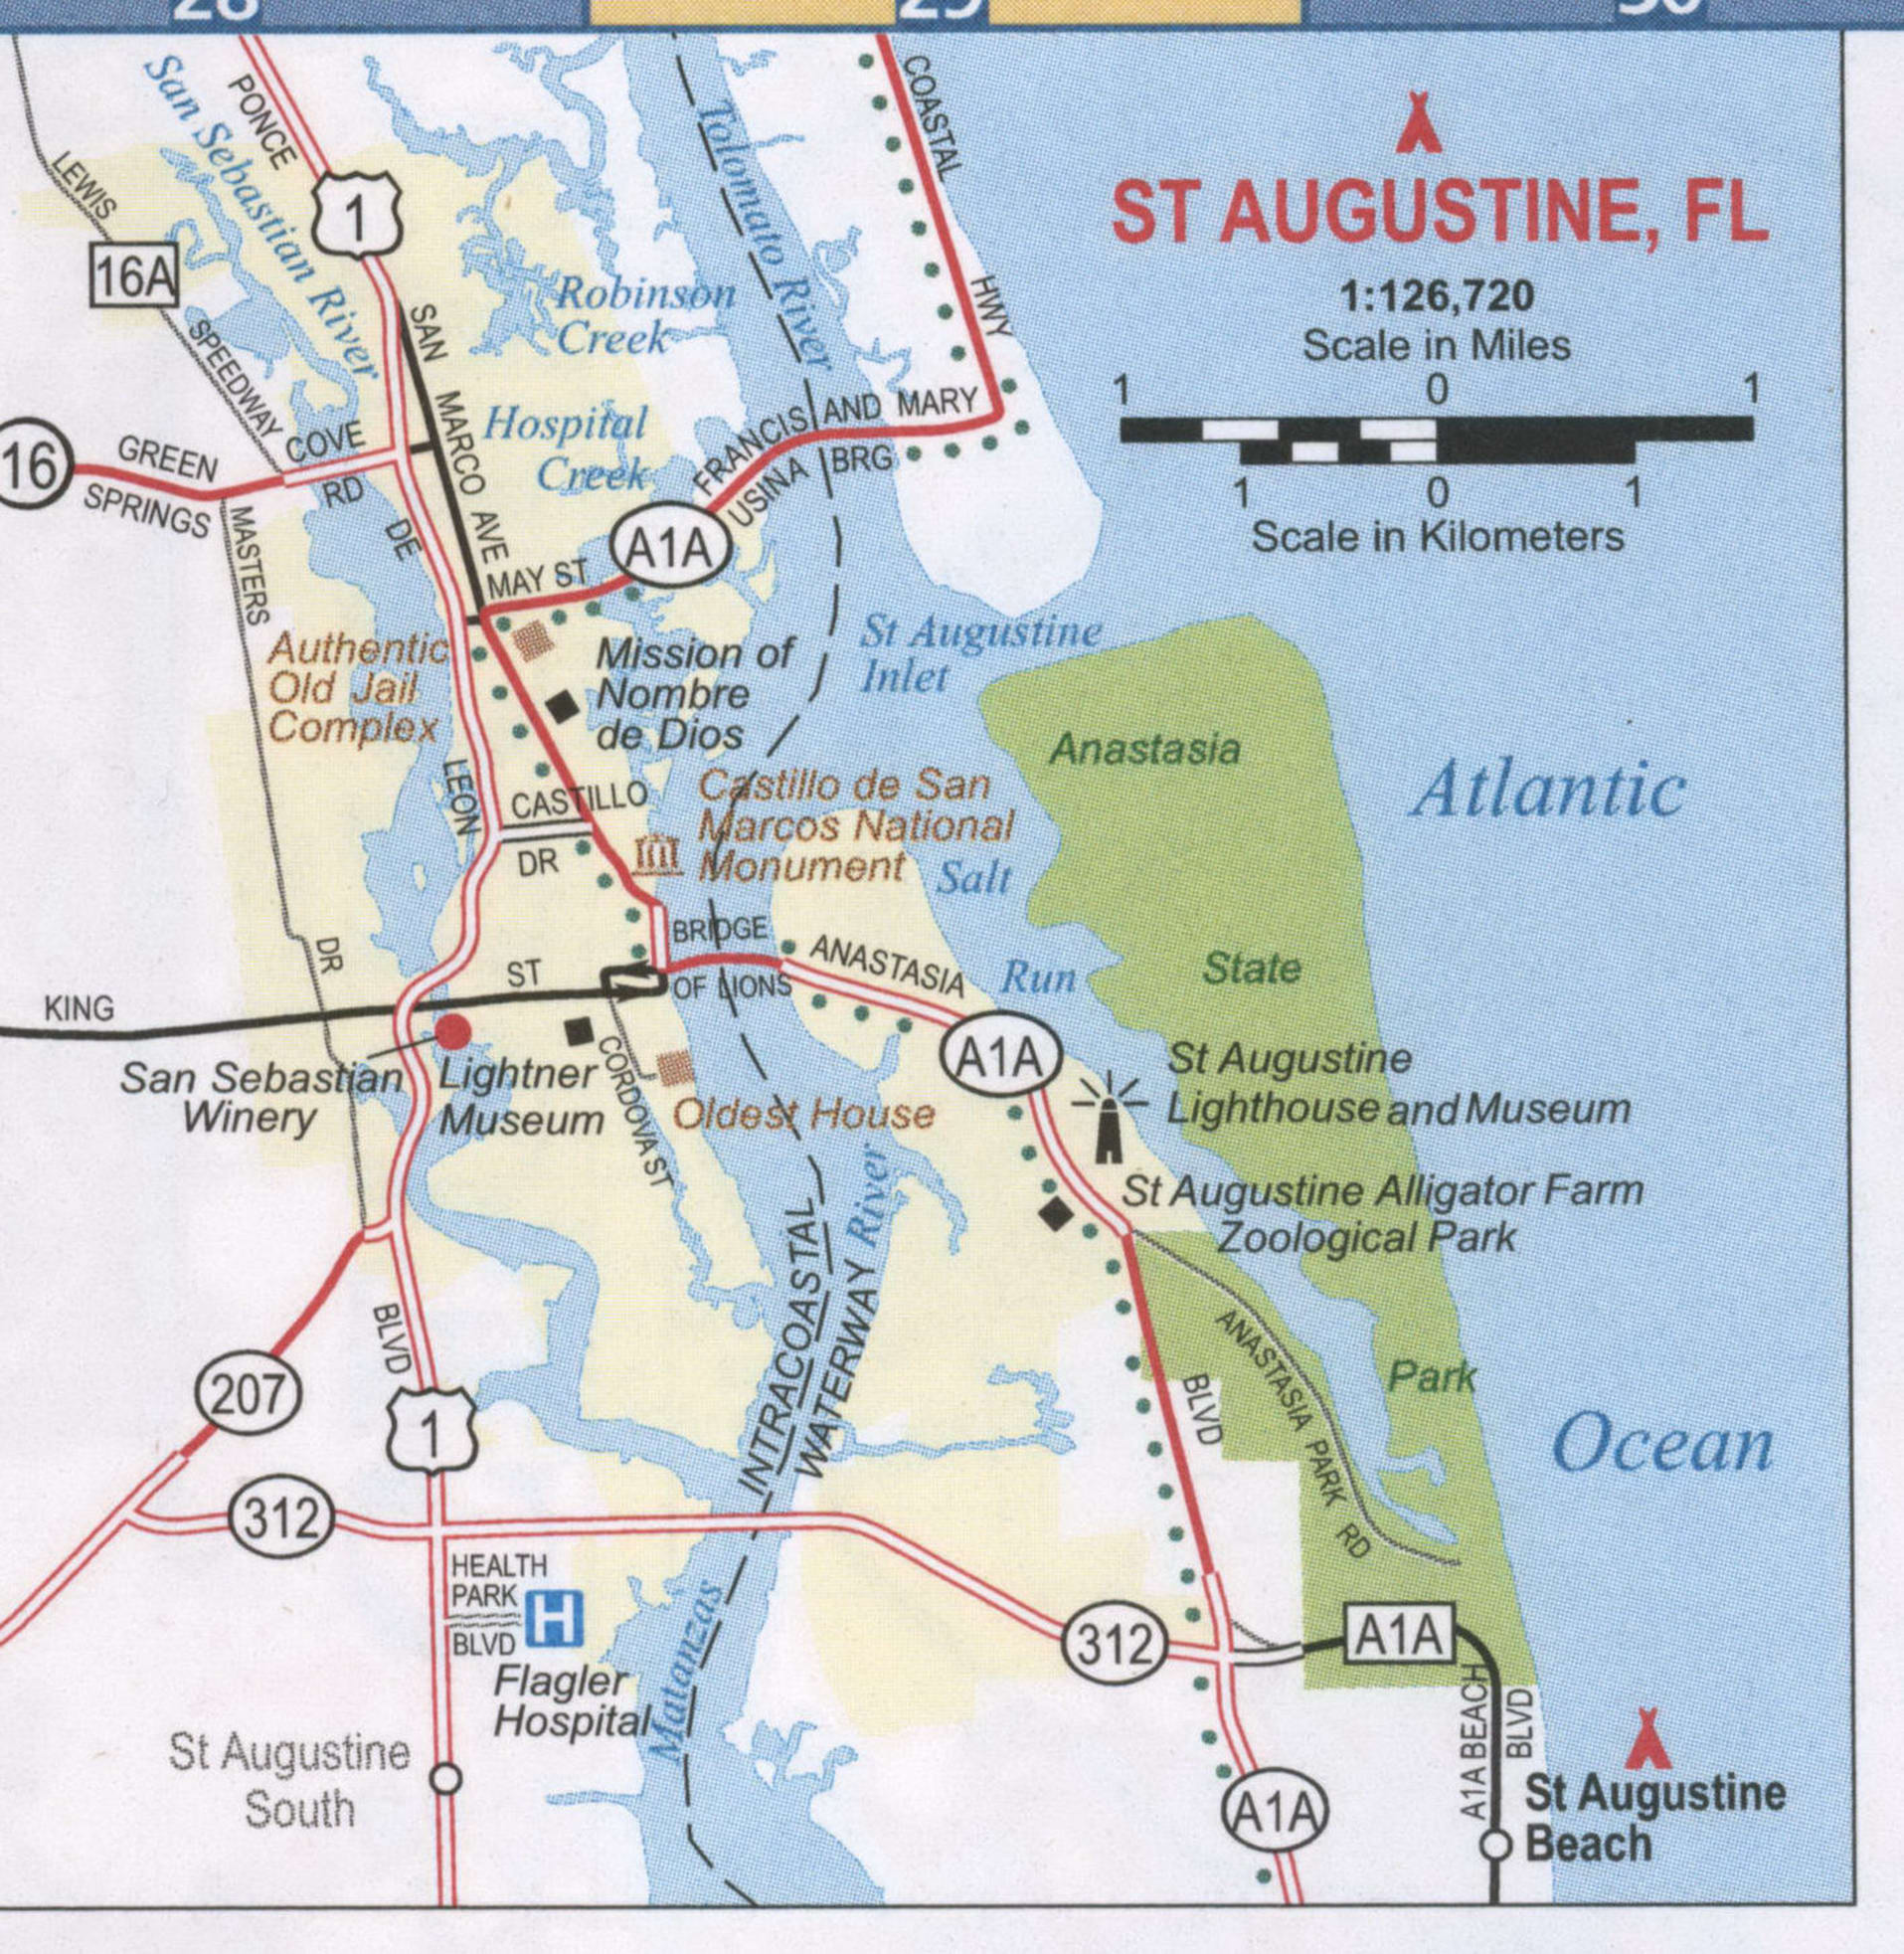 St Augustine FL road map